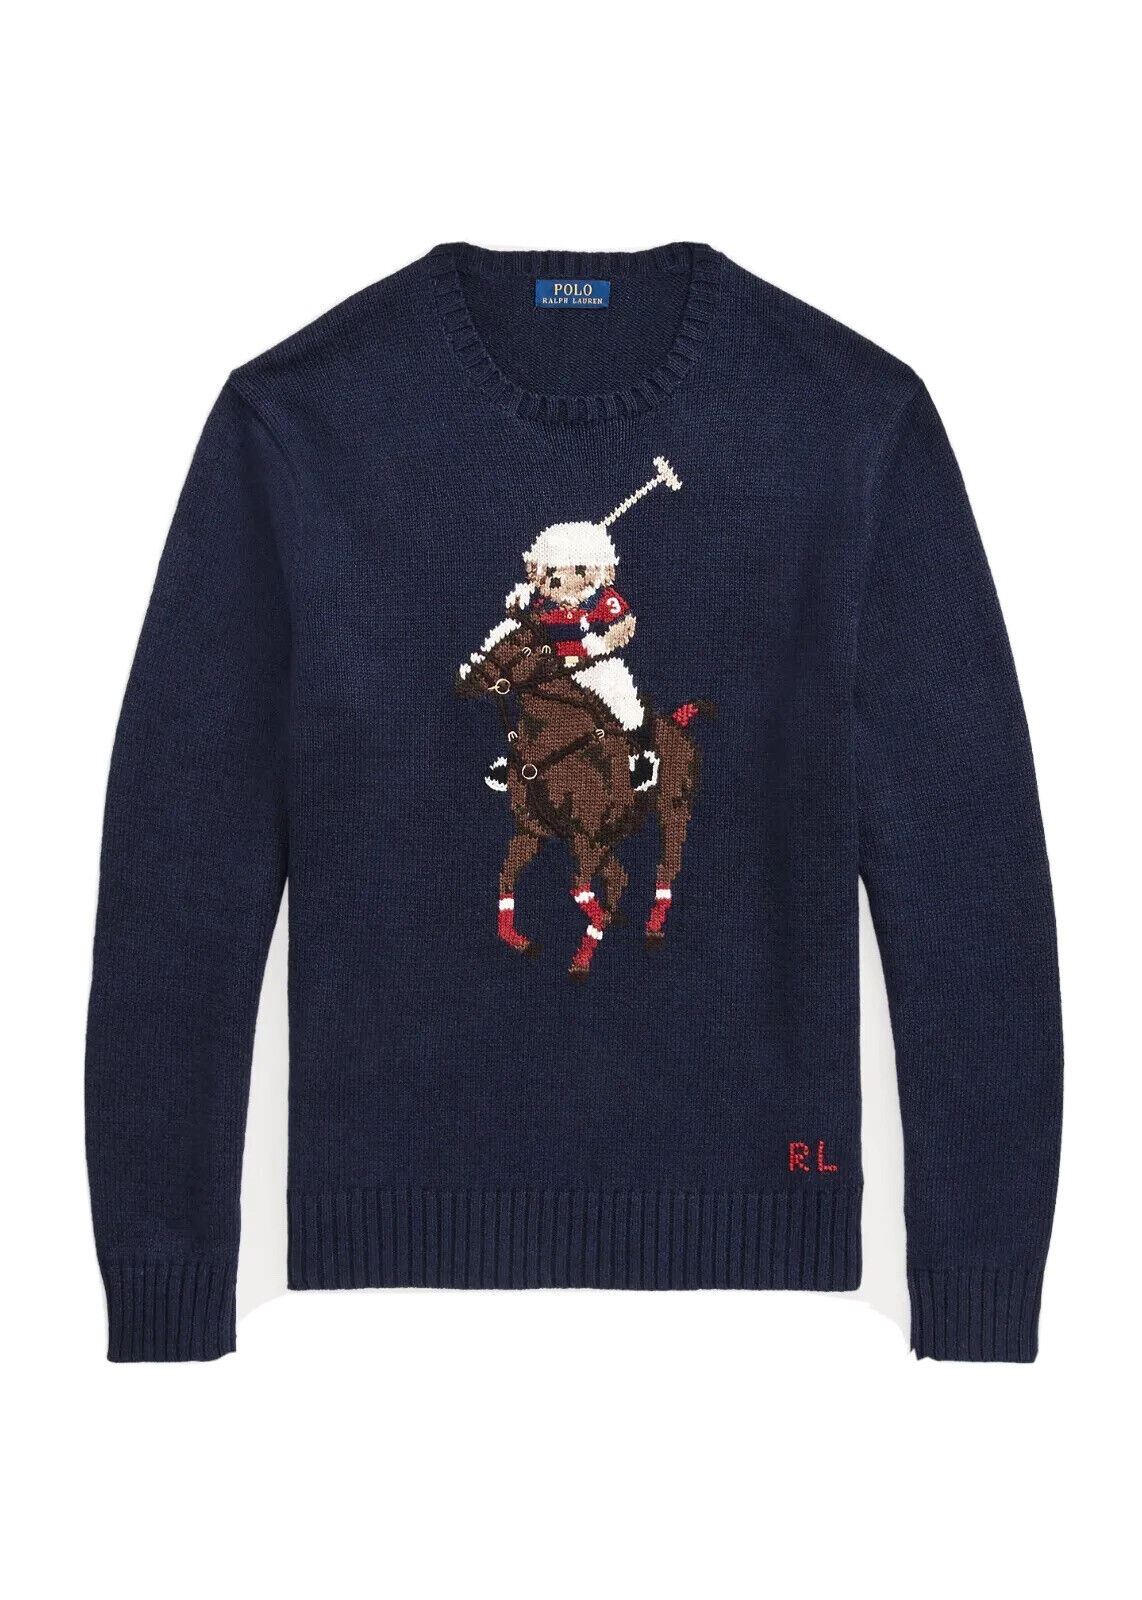 NWT $428 Polo Ralph Lauren Big Pony Bear Cotton/Linen Blue Sweater 3XB